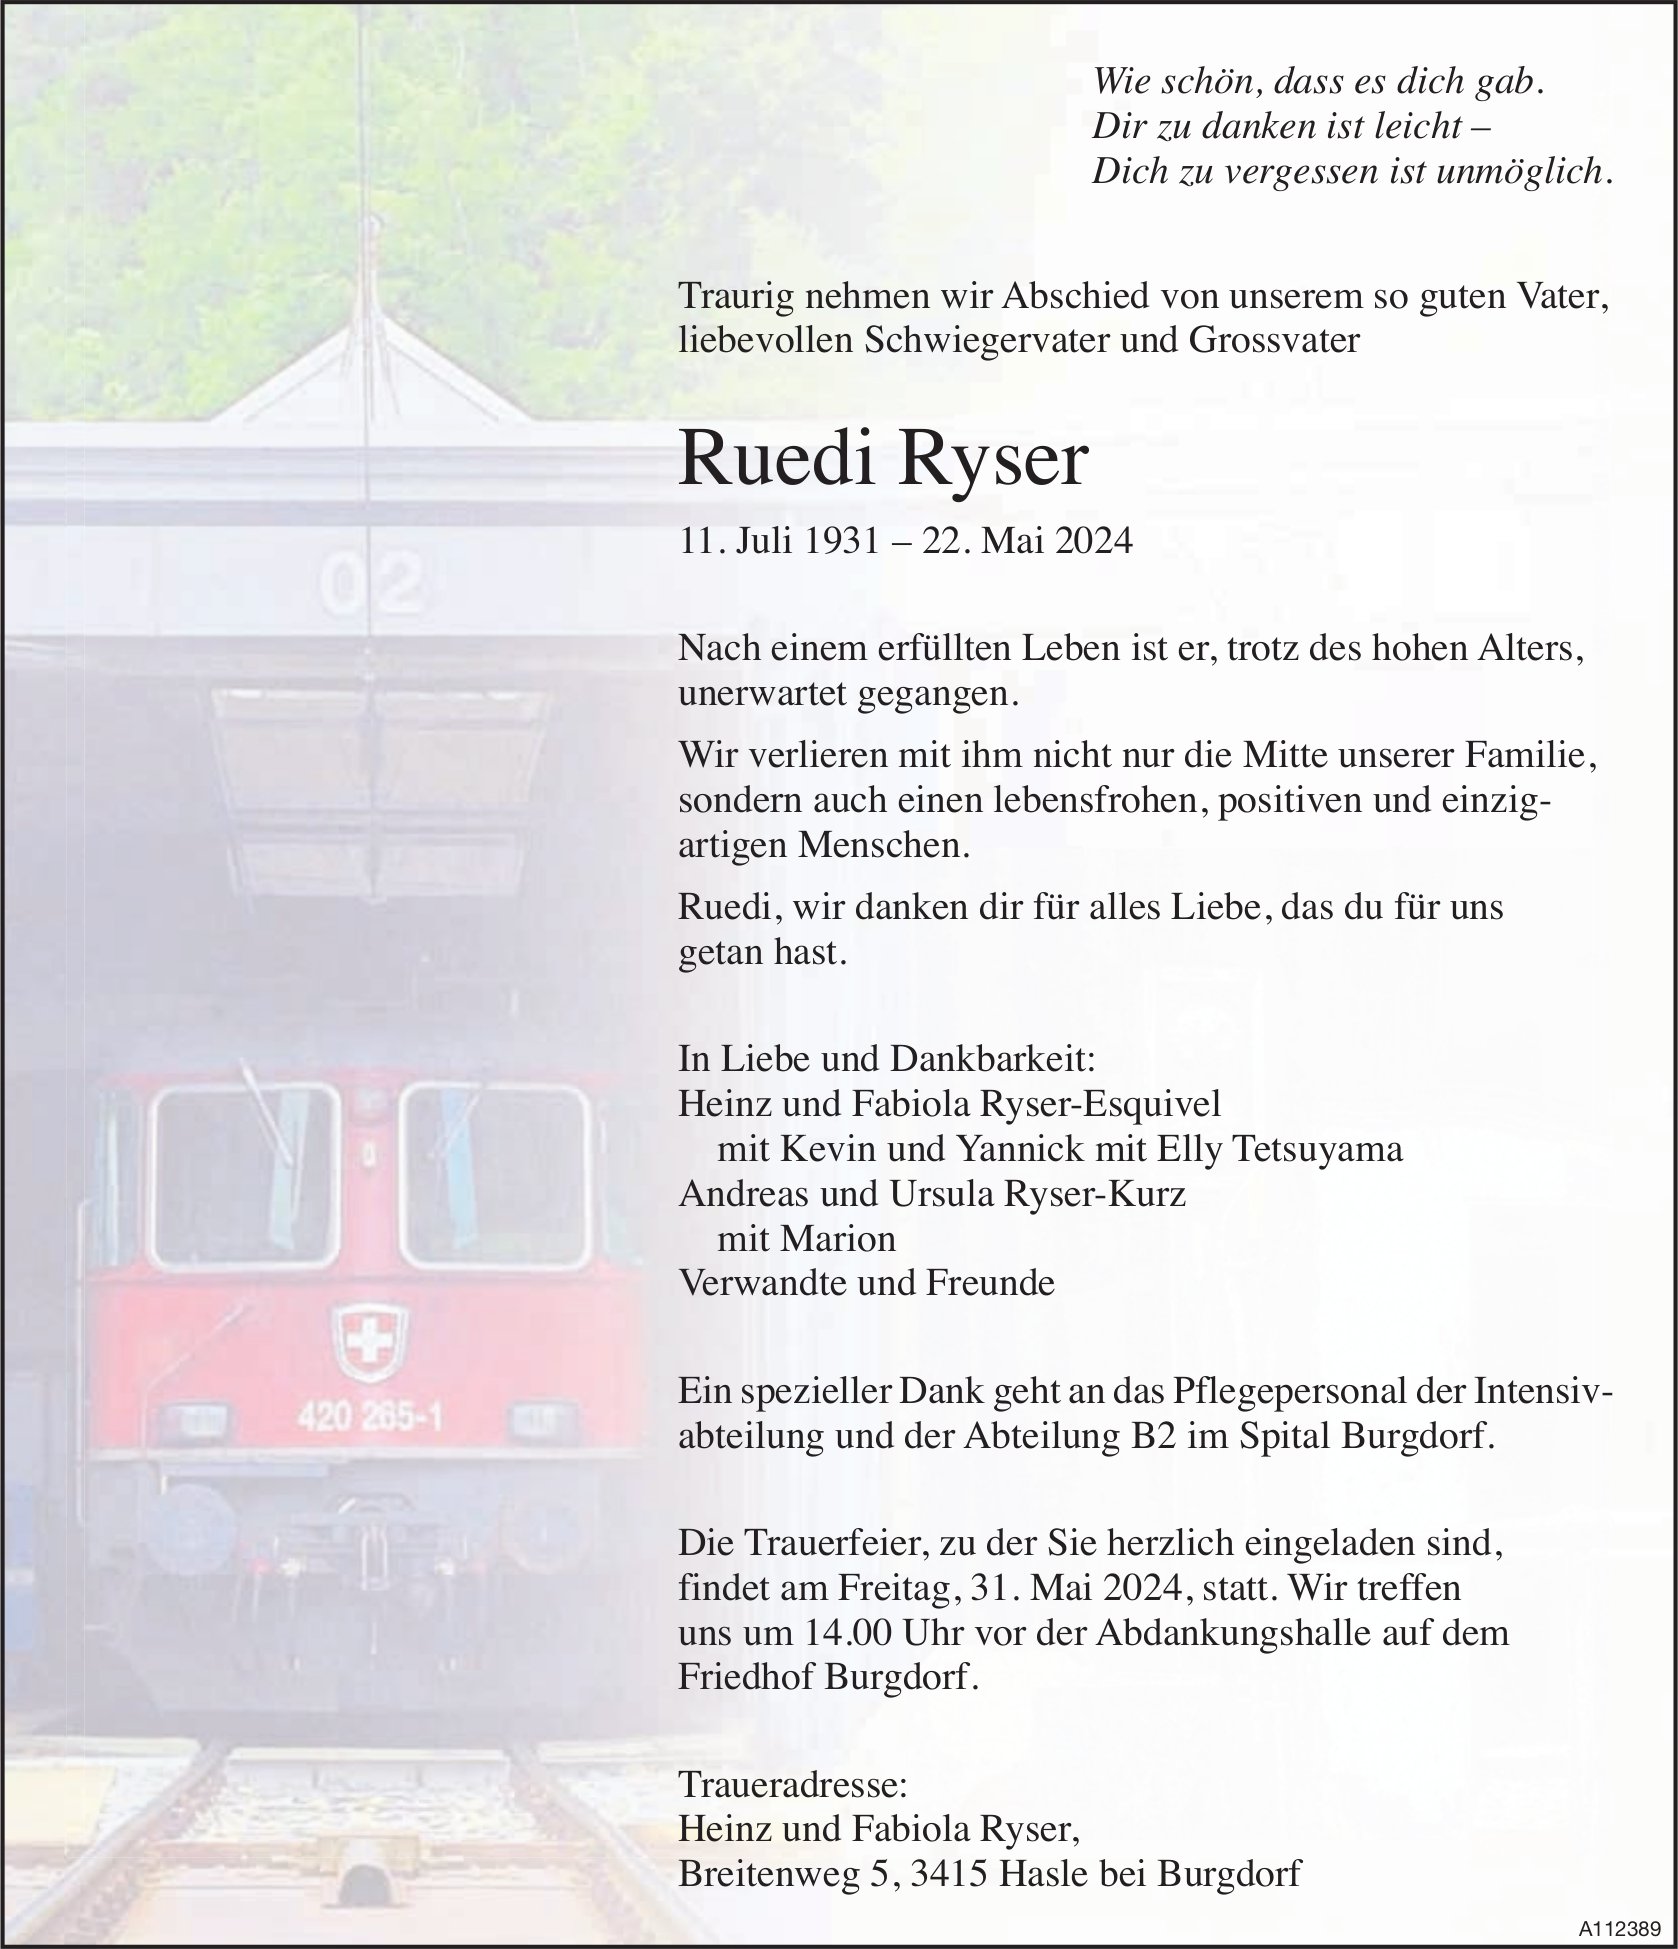 Ruedi Ryser, Mai 2024 / TA